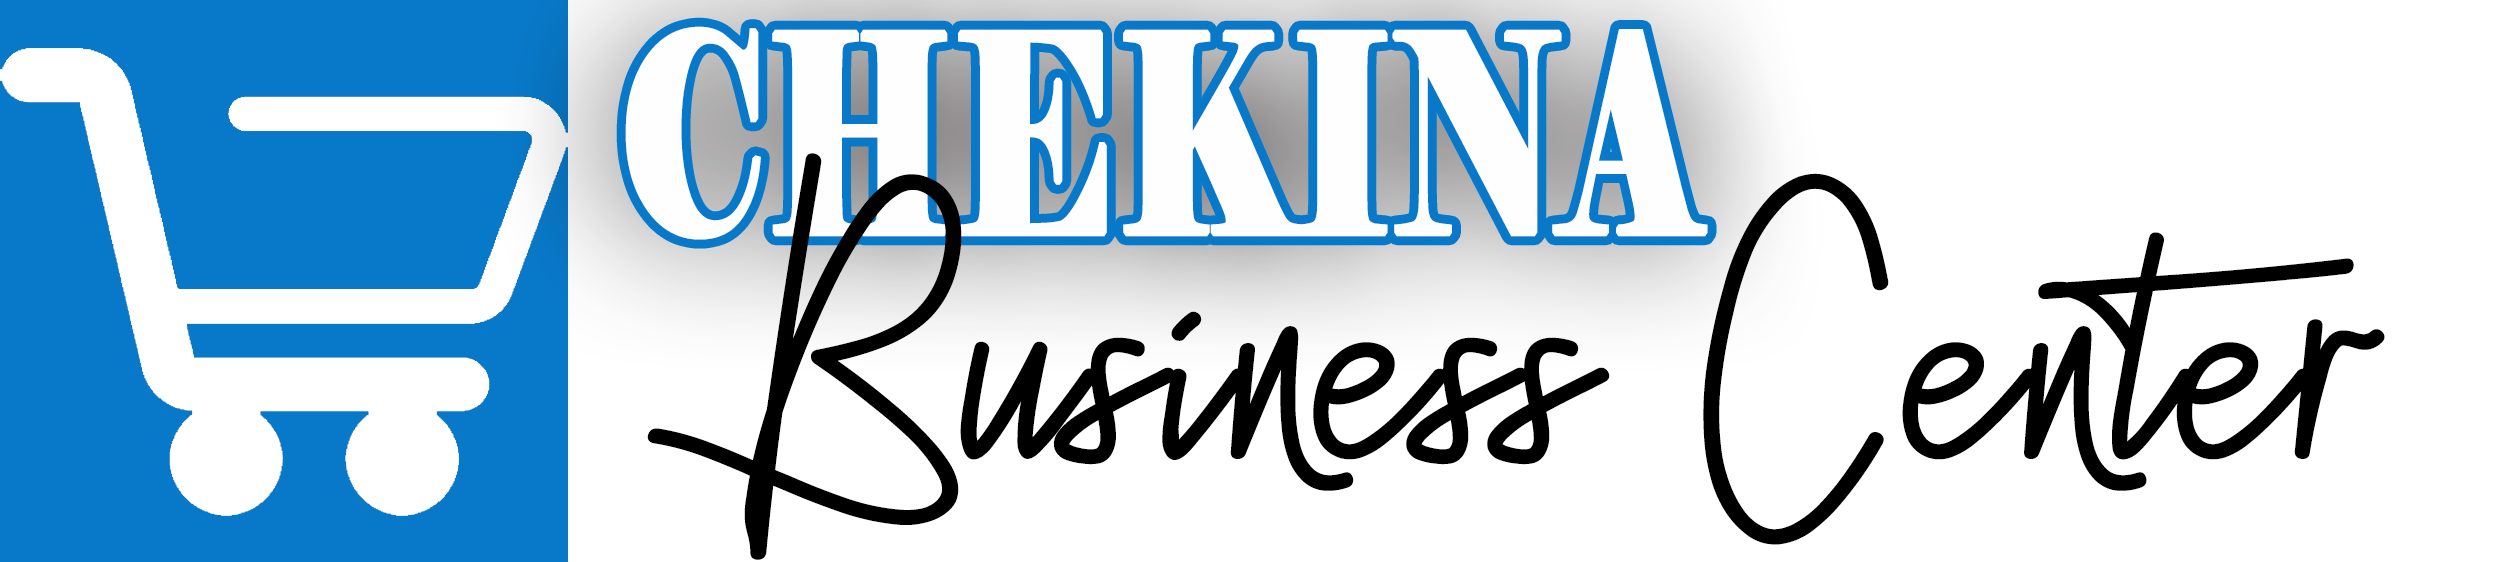 logo Chekina Business Center.png